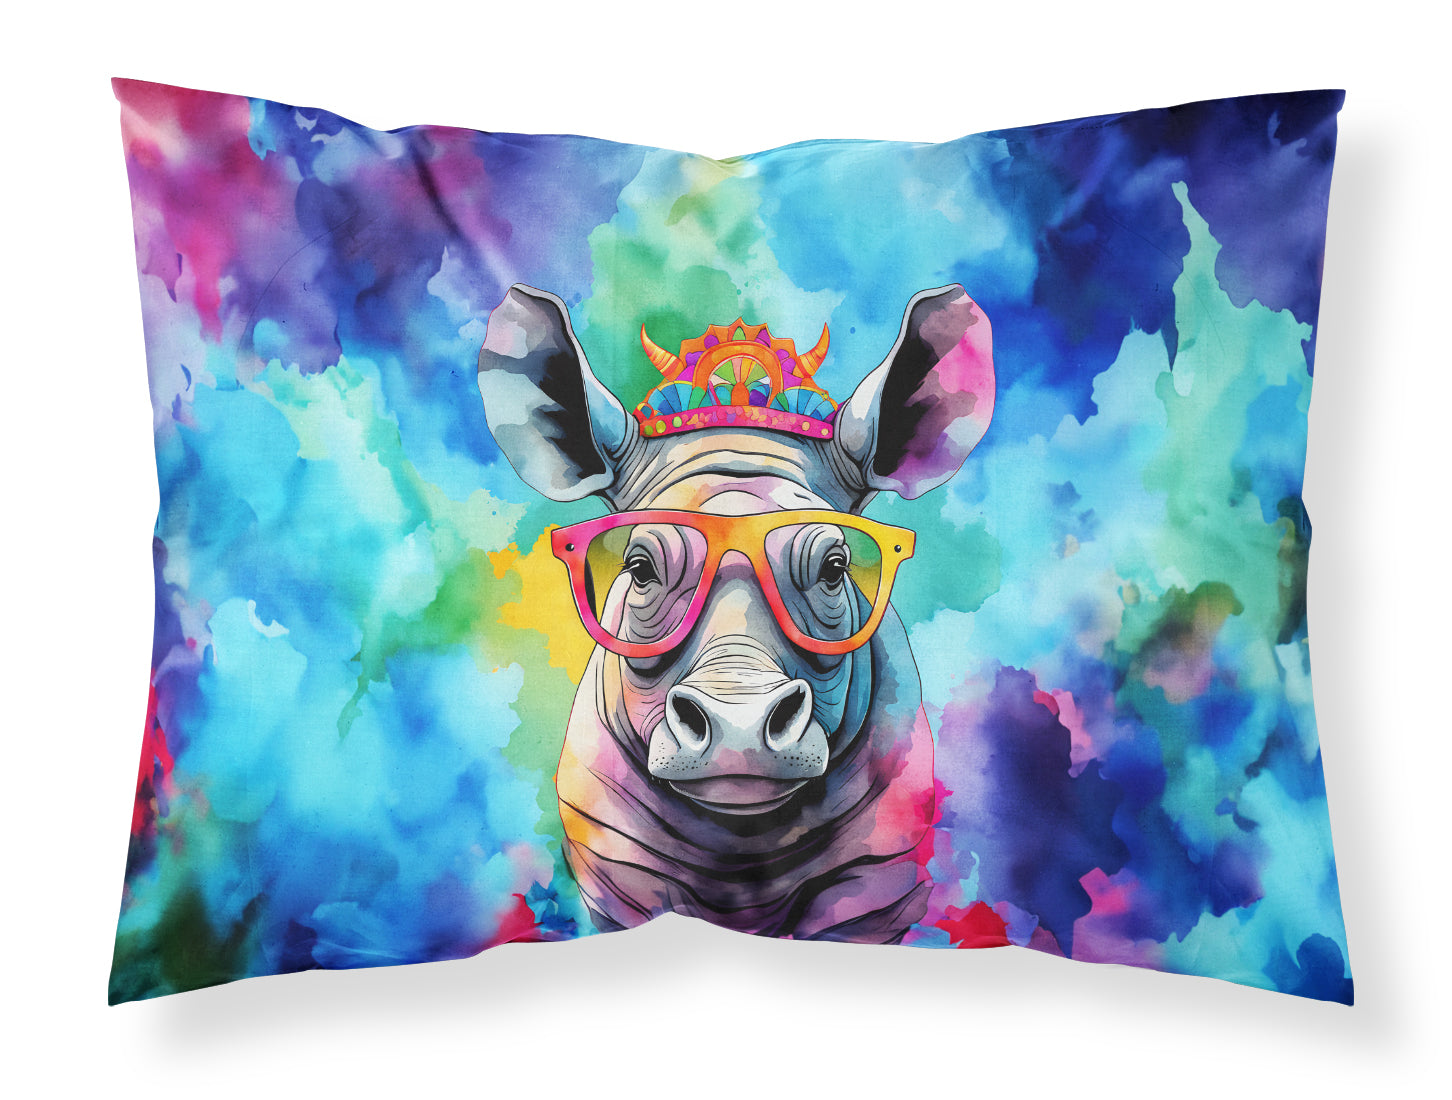 Buy this Hippie Animal Rhinoceros Standard Pillowcase